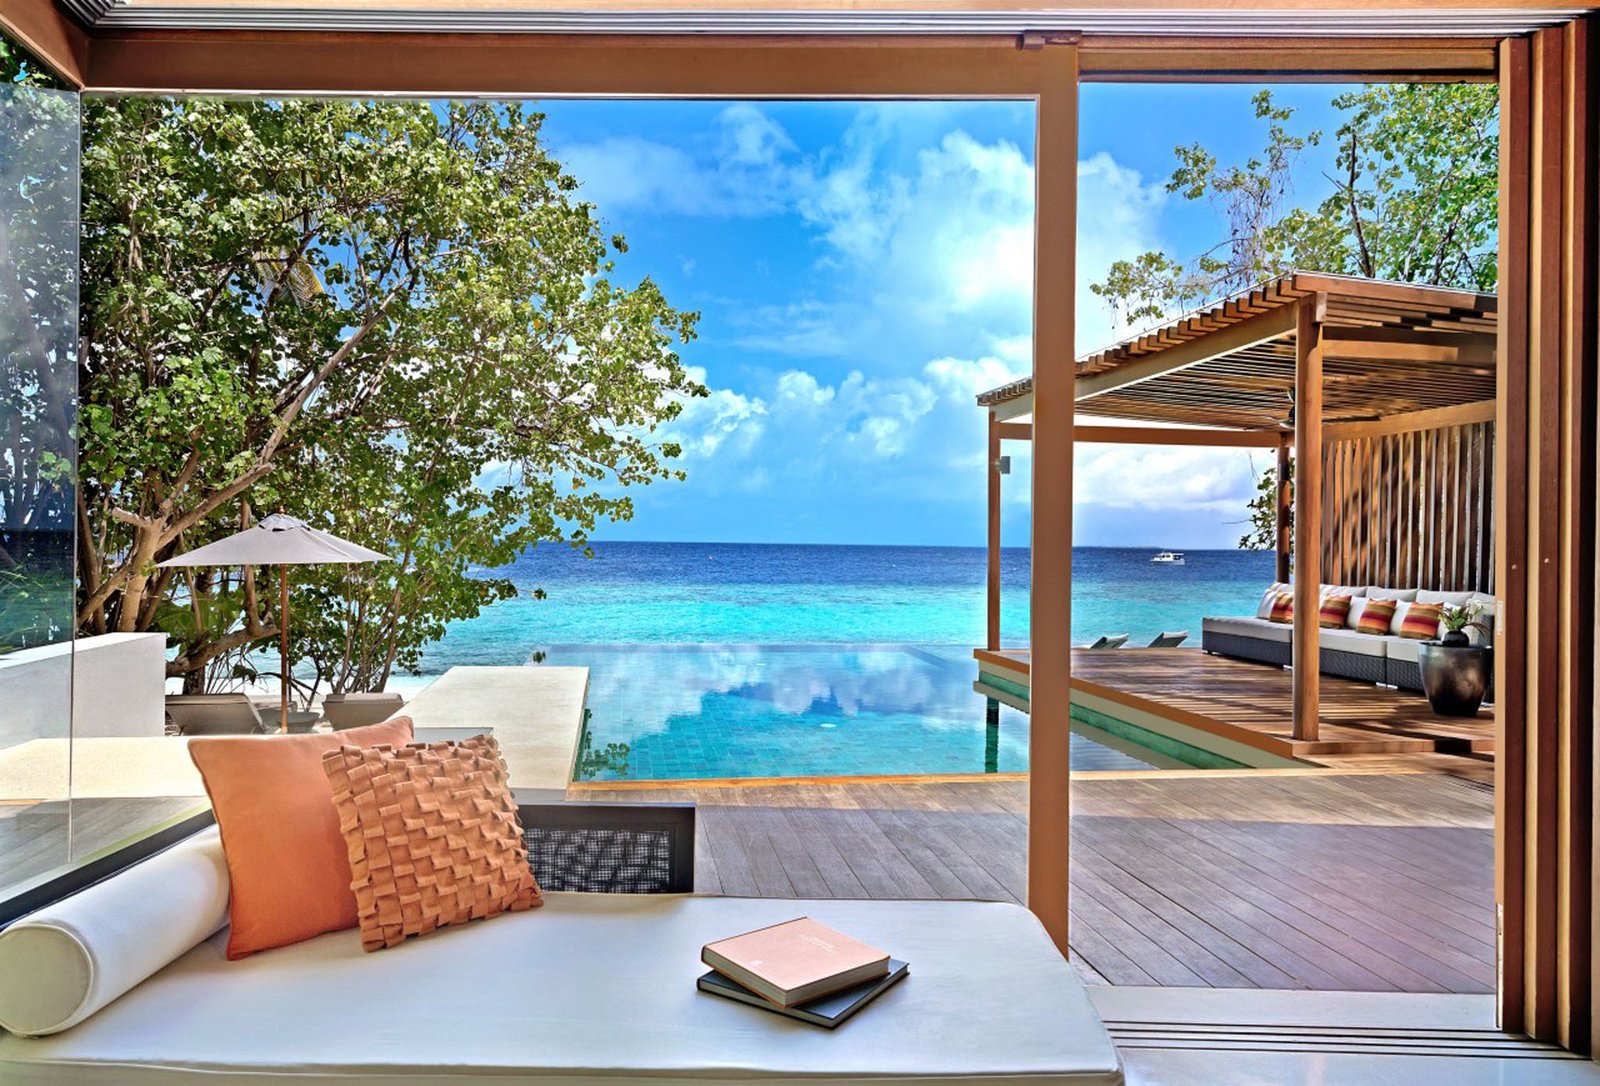 Maldives All Inclusive Package - Maldives Luxury Hotel